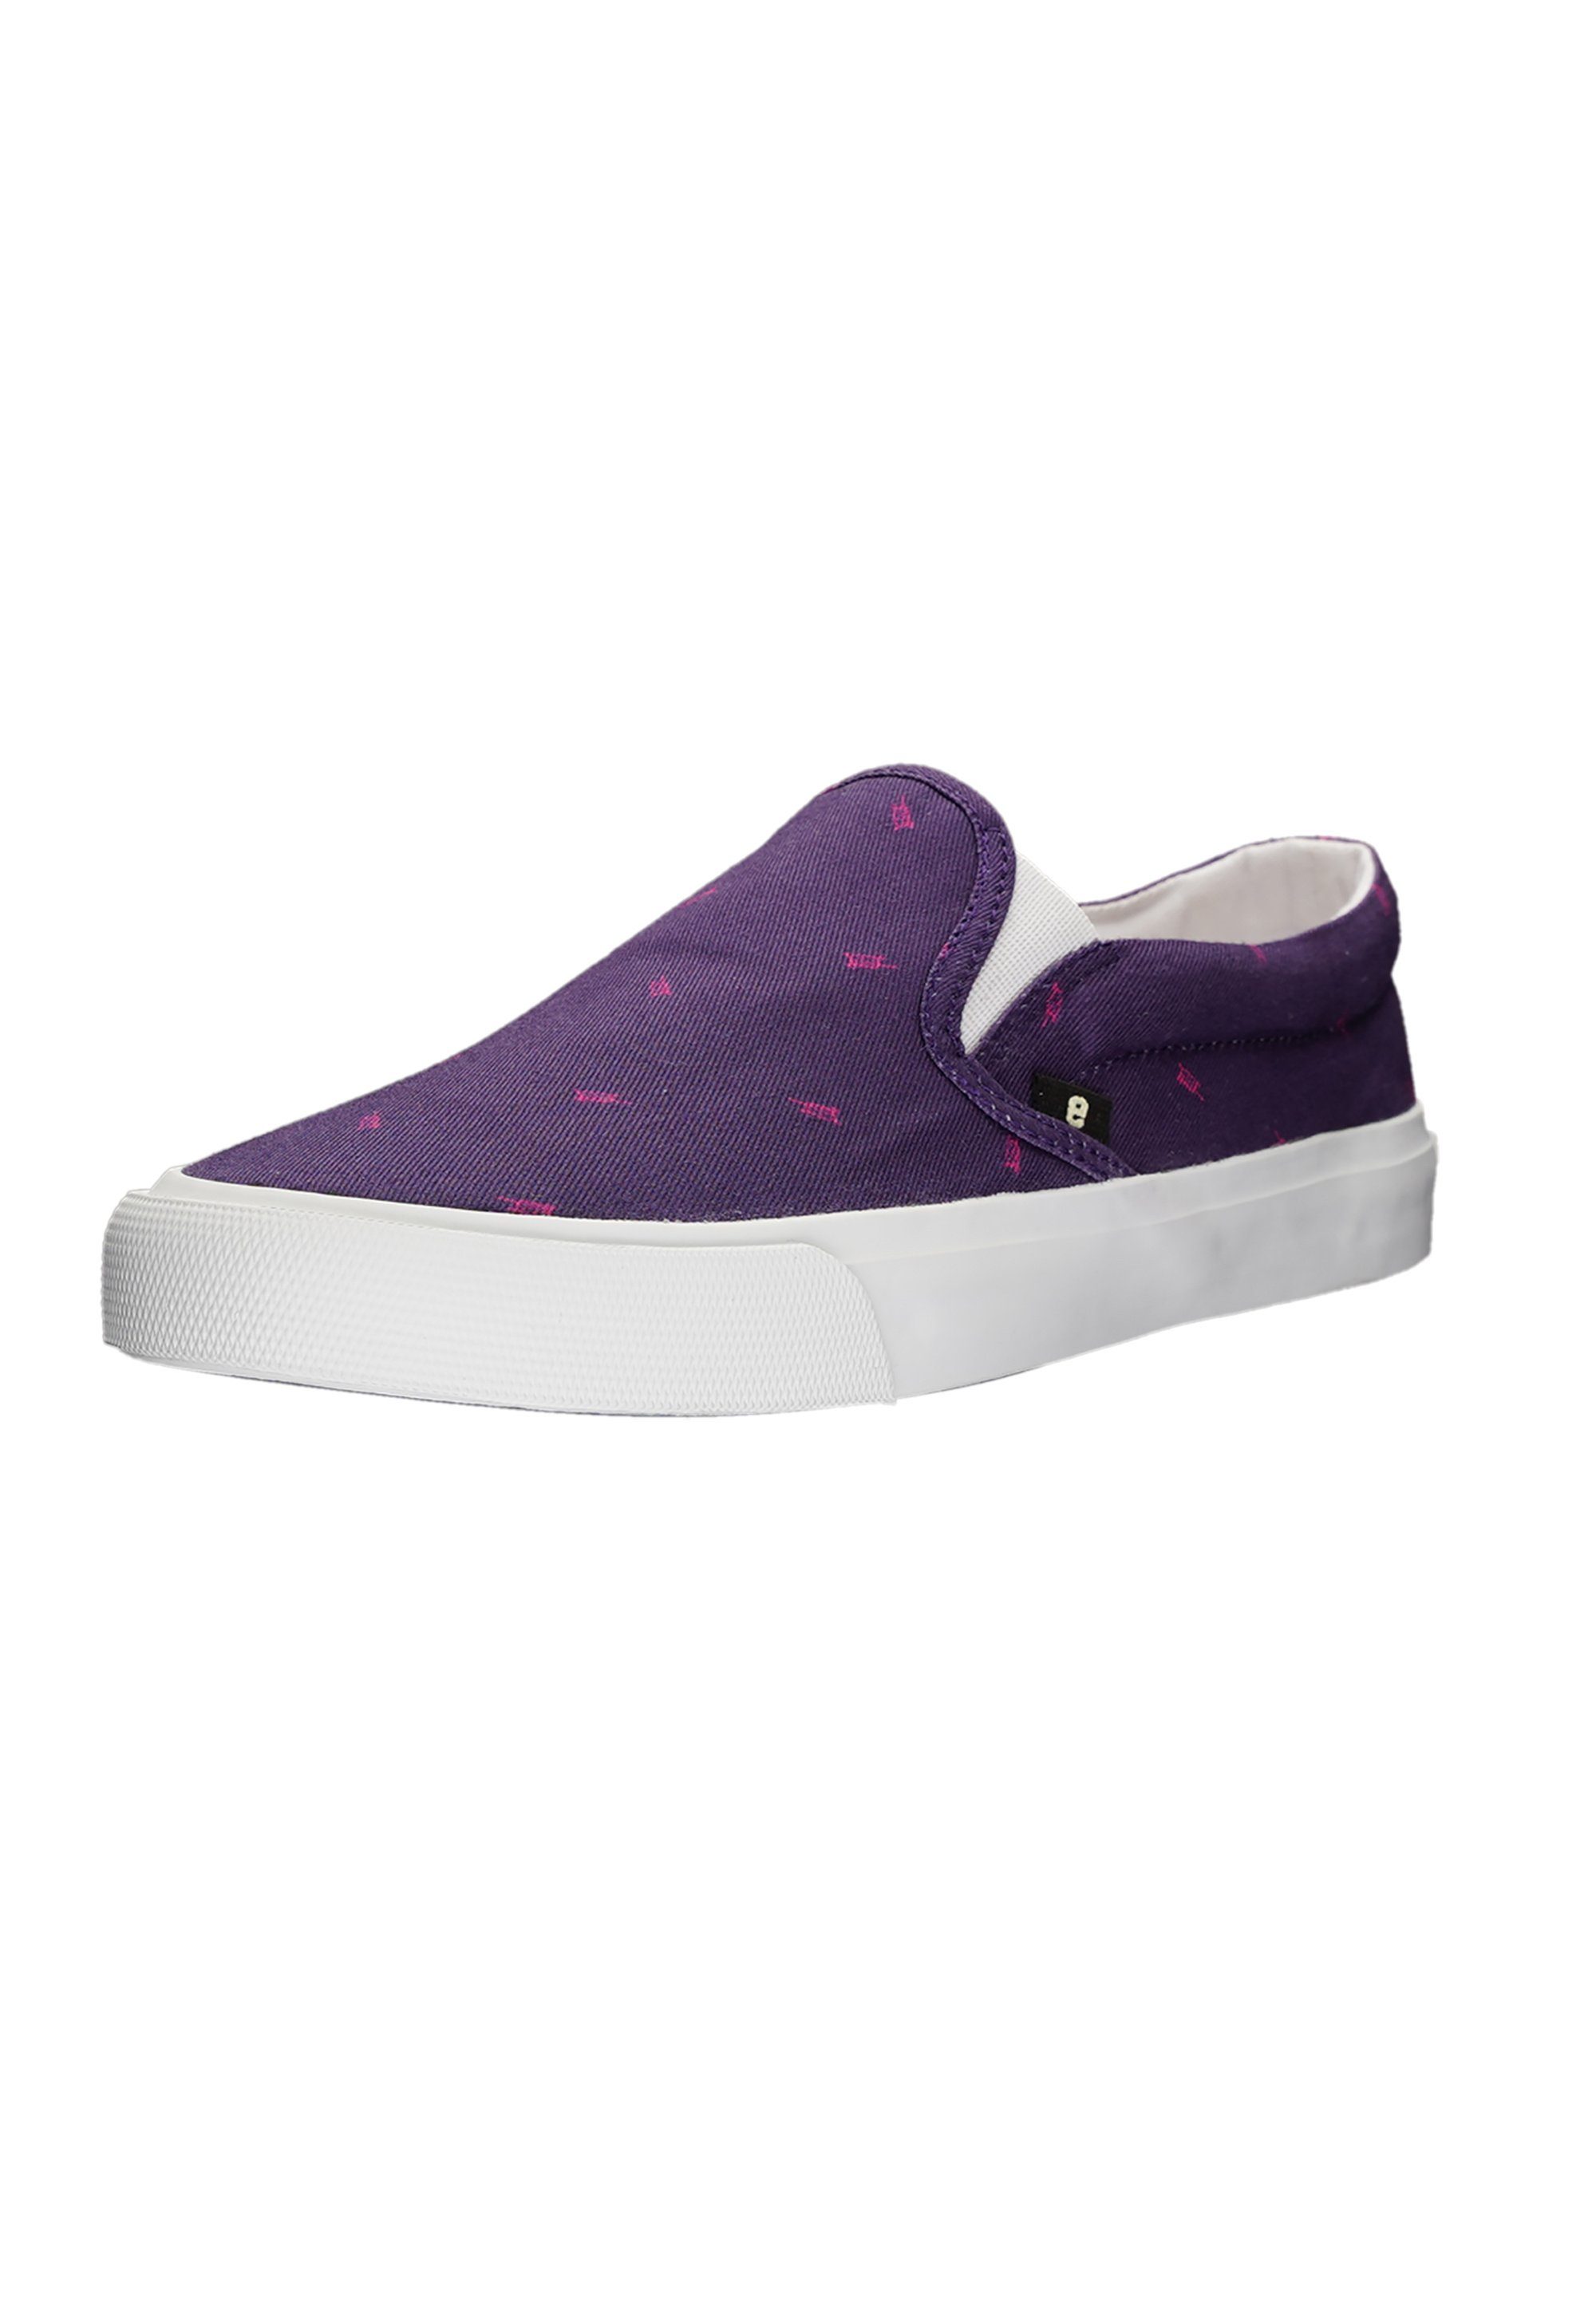 Fair, snow Fair Sneaker Collection Nachhaltig Vegan, purple leopard Deck ETHLETIC